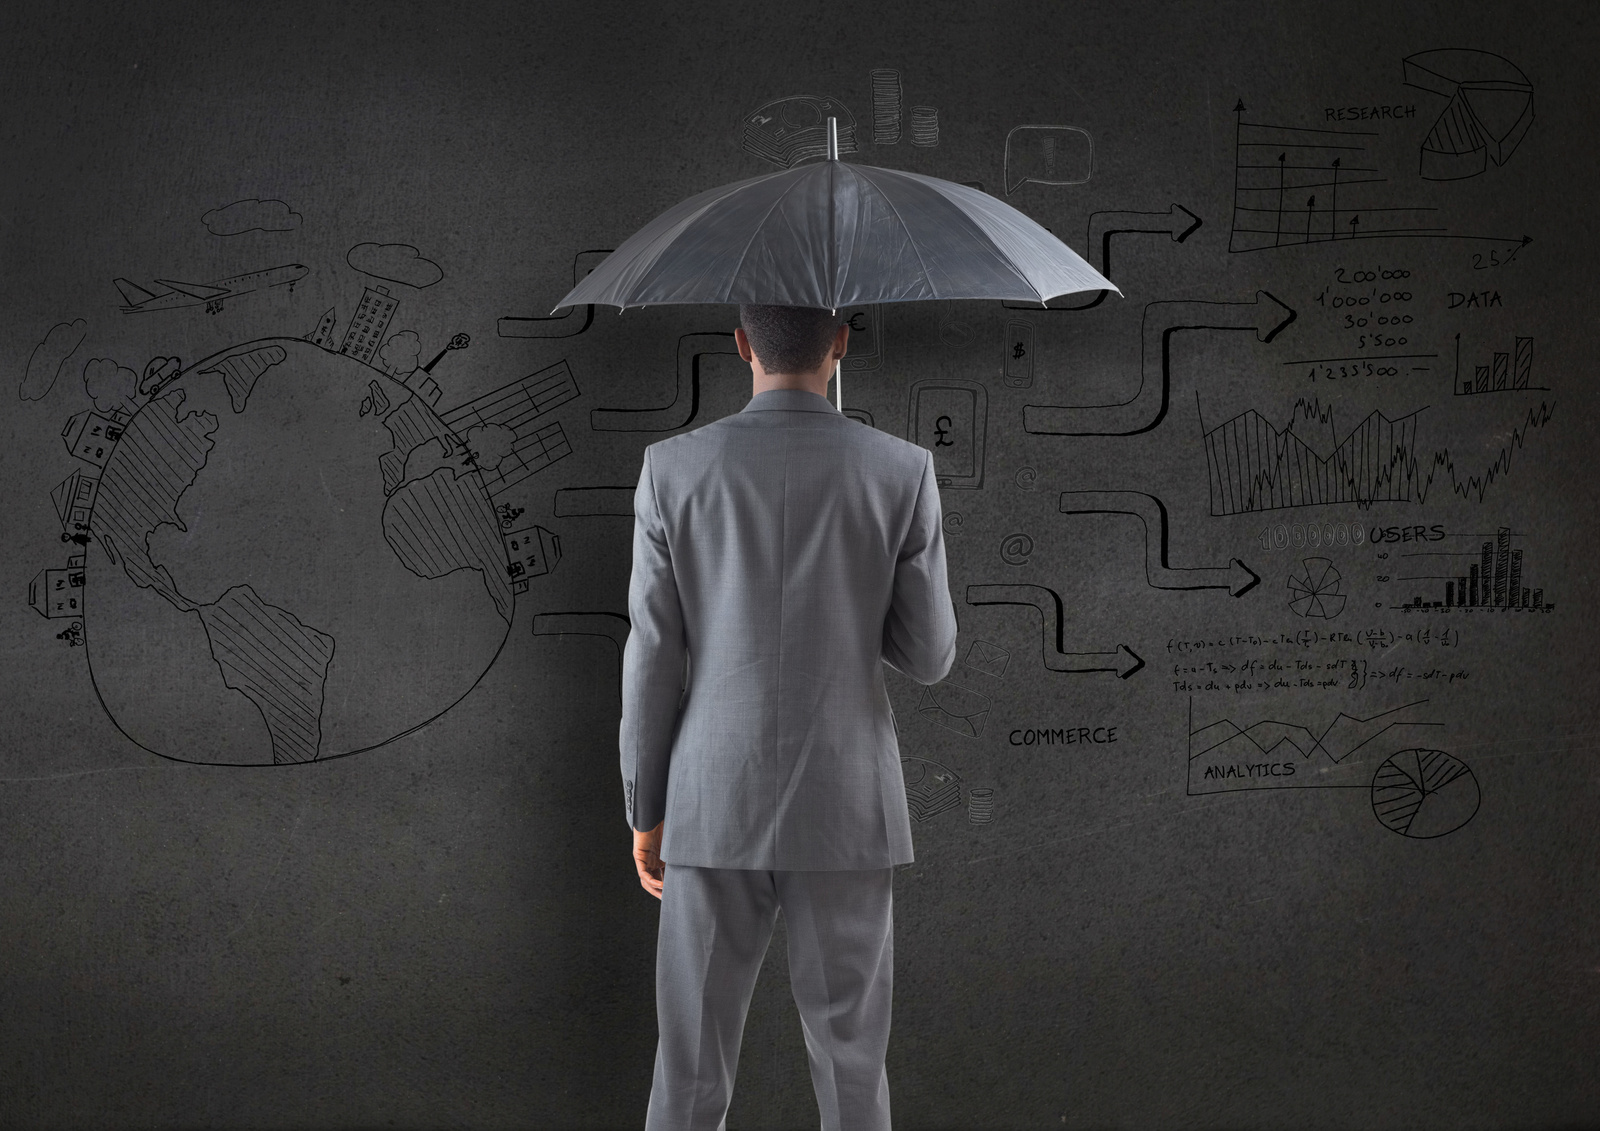 Businessman holding an umbrella against business plan sketch on